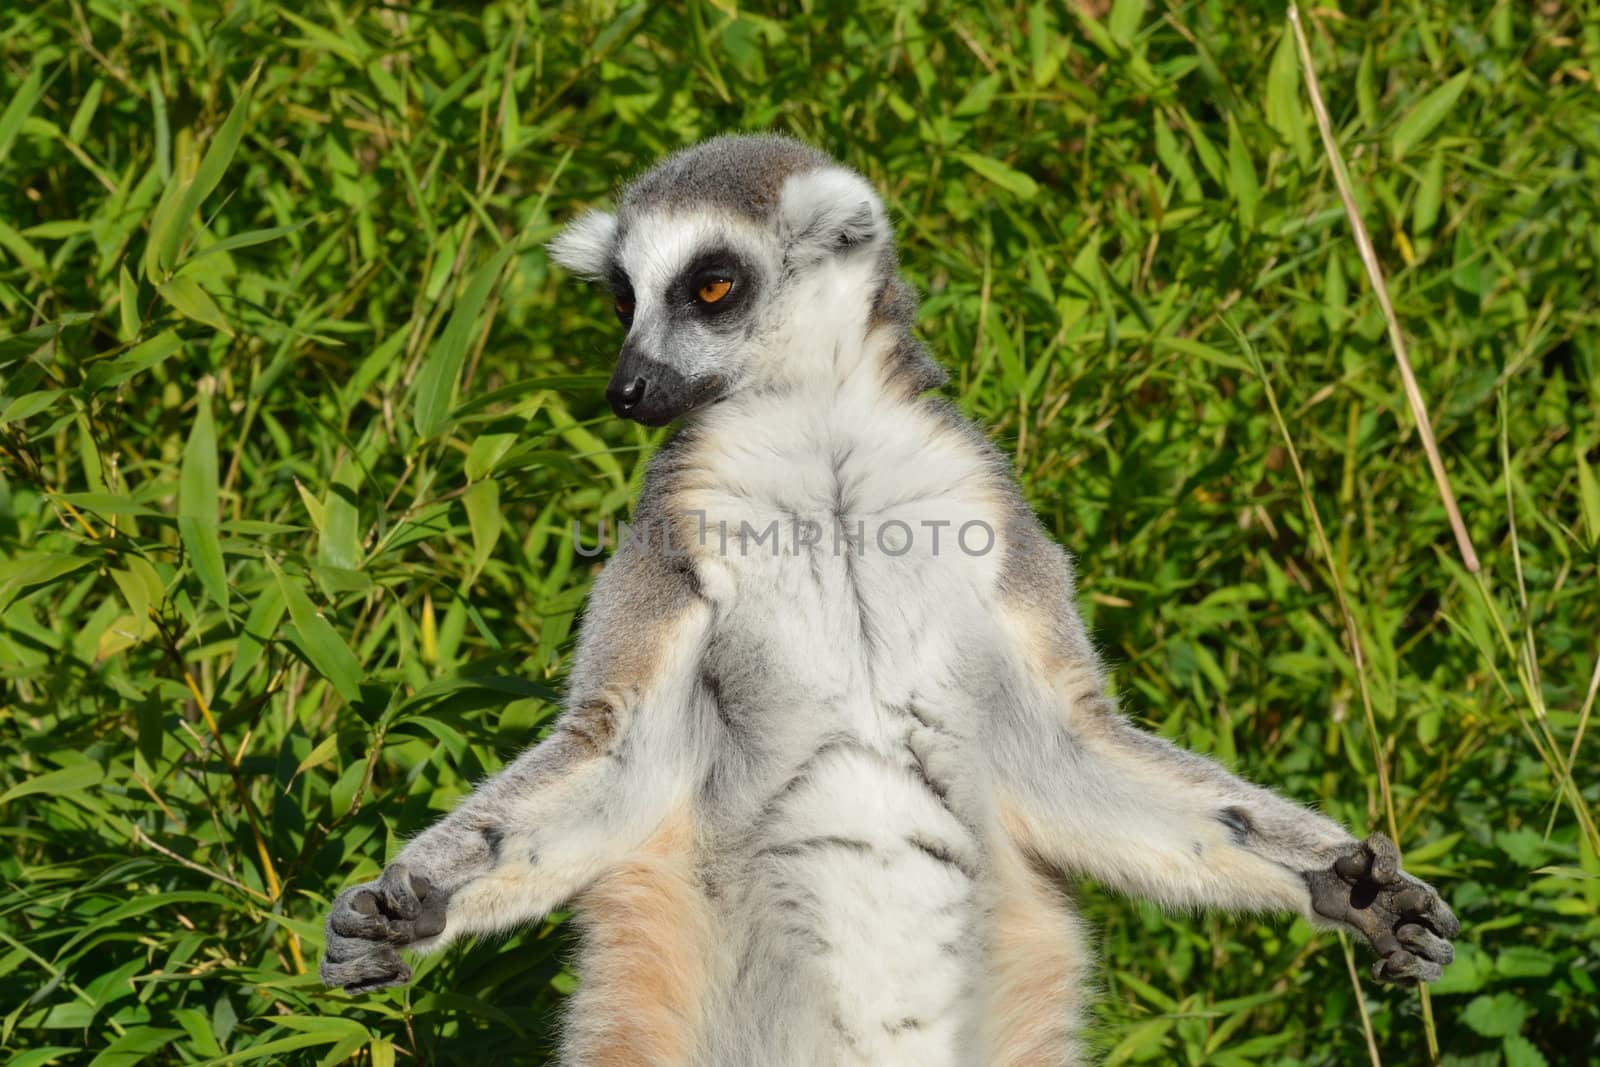 lemur sunbathing by pauws99